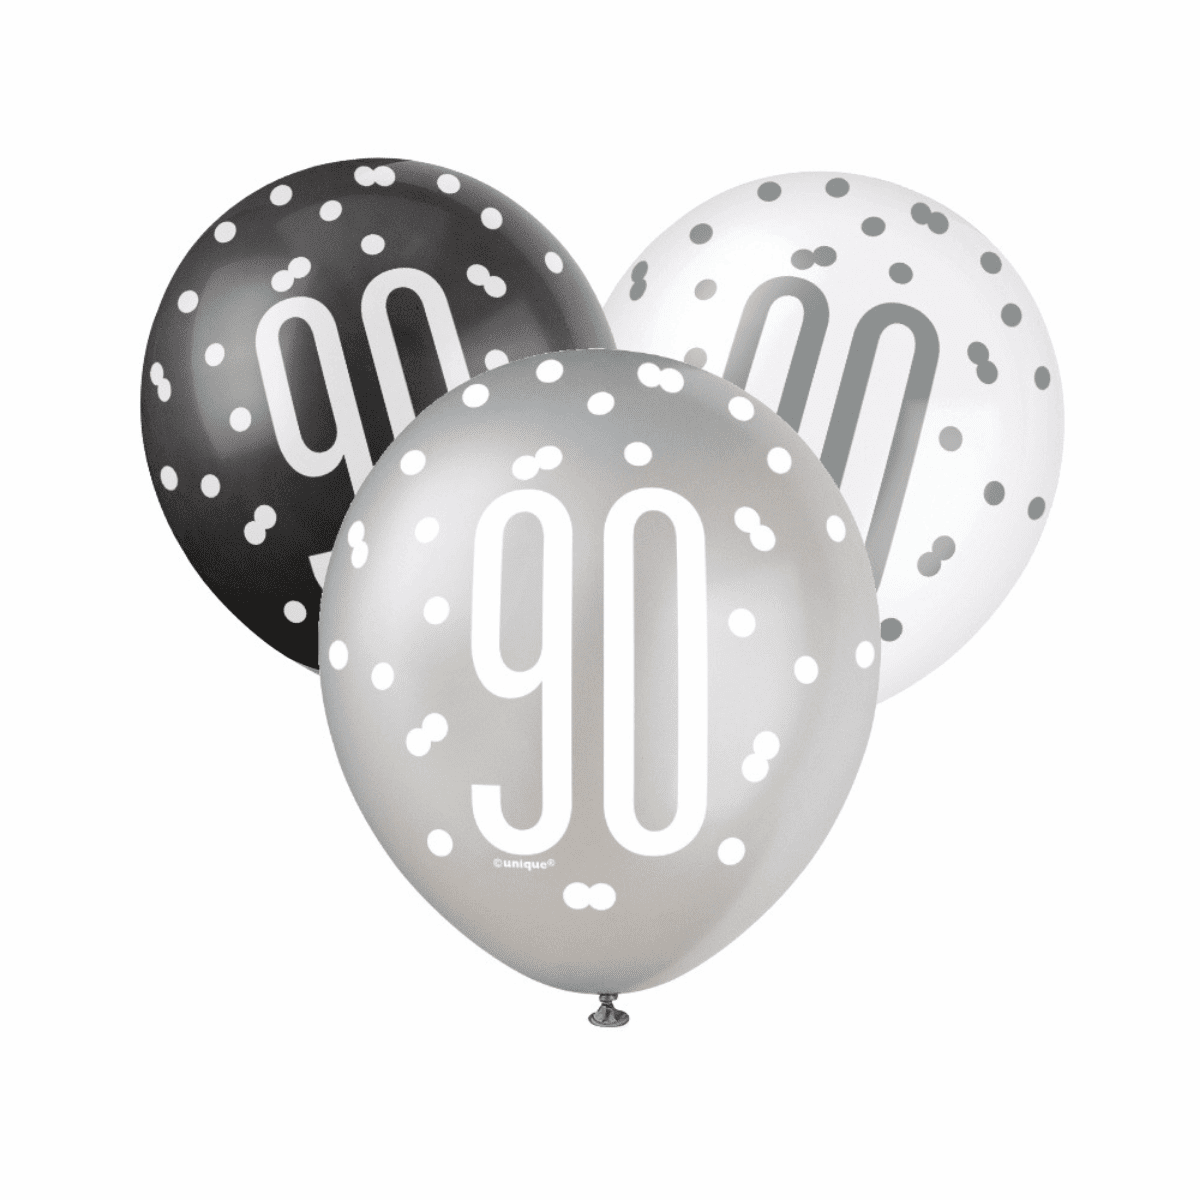 Black, Silver, & White Latex Balloons 90th